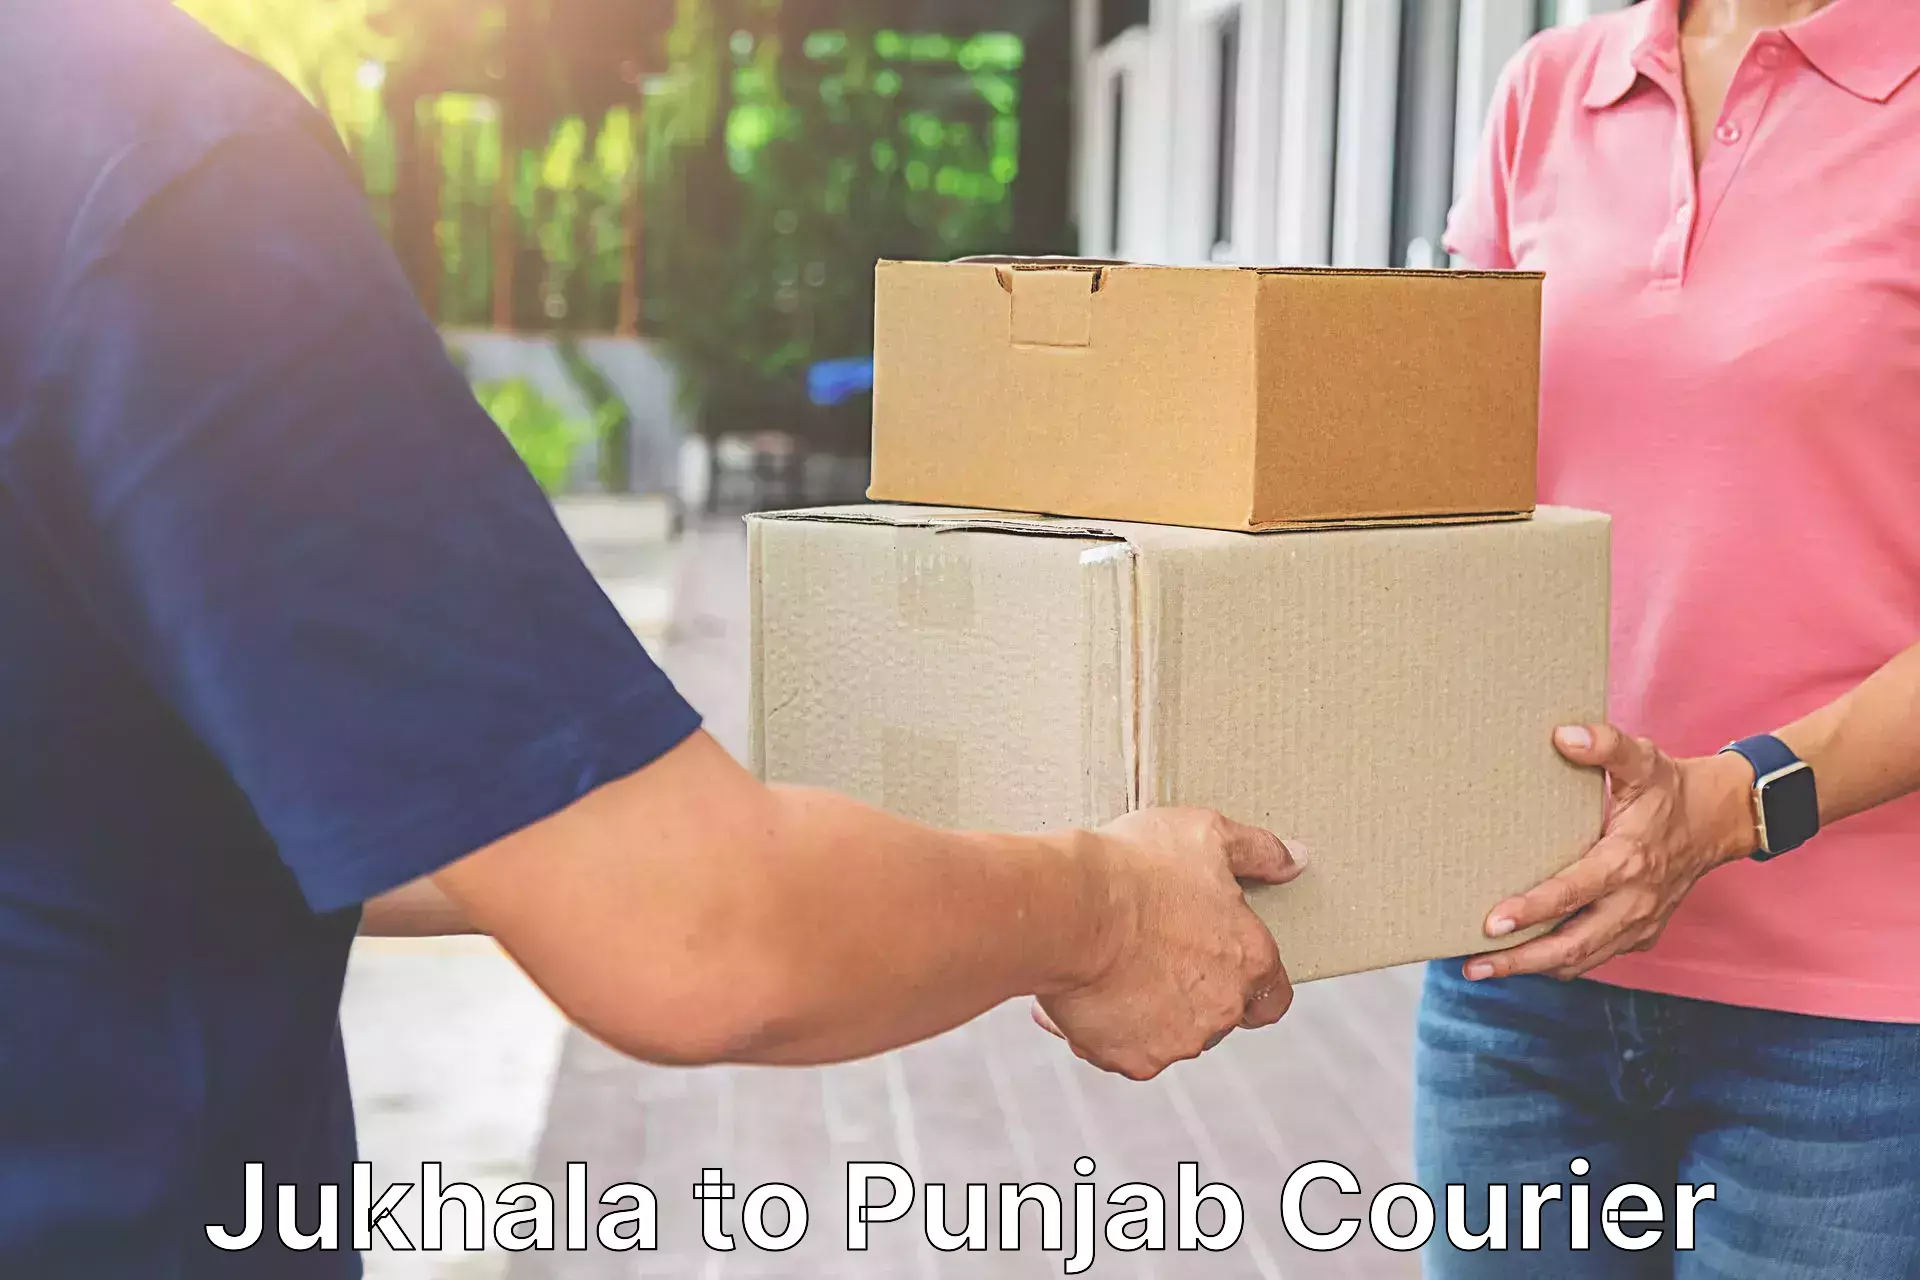 Next day courier Jukhala to Batala